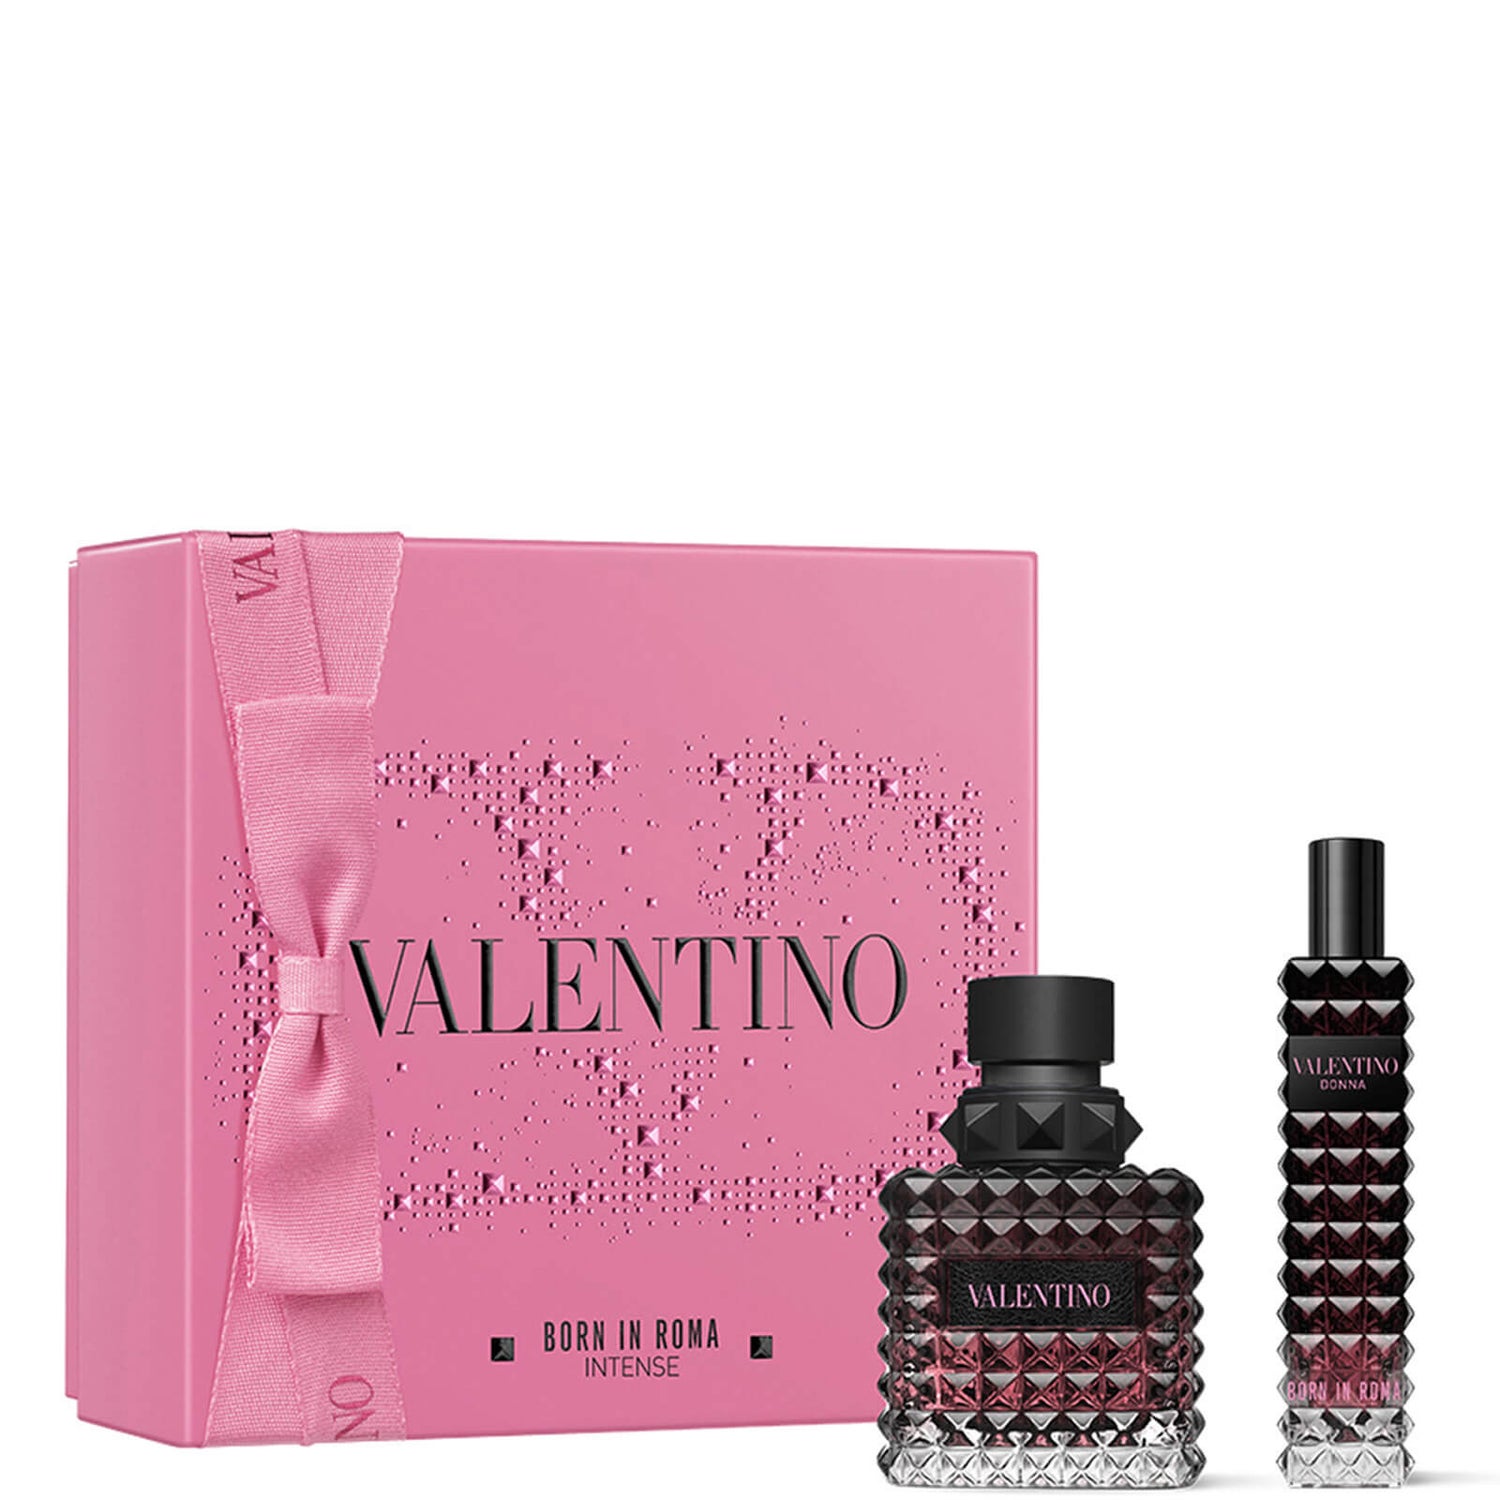 Valentino Born in Roma Donna intense 50ml Eau de Parfum Gift Set